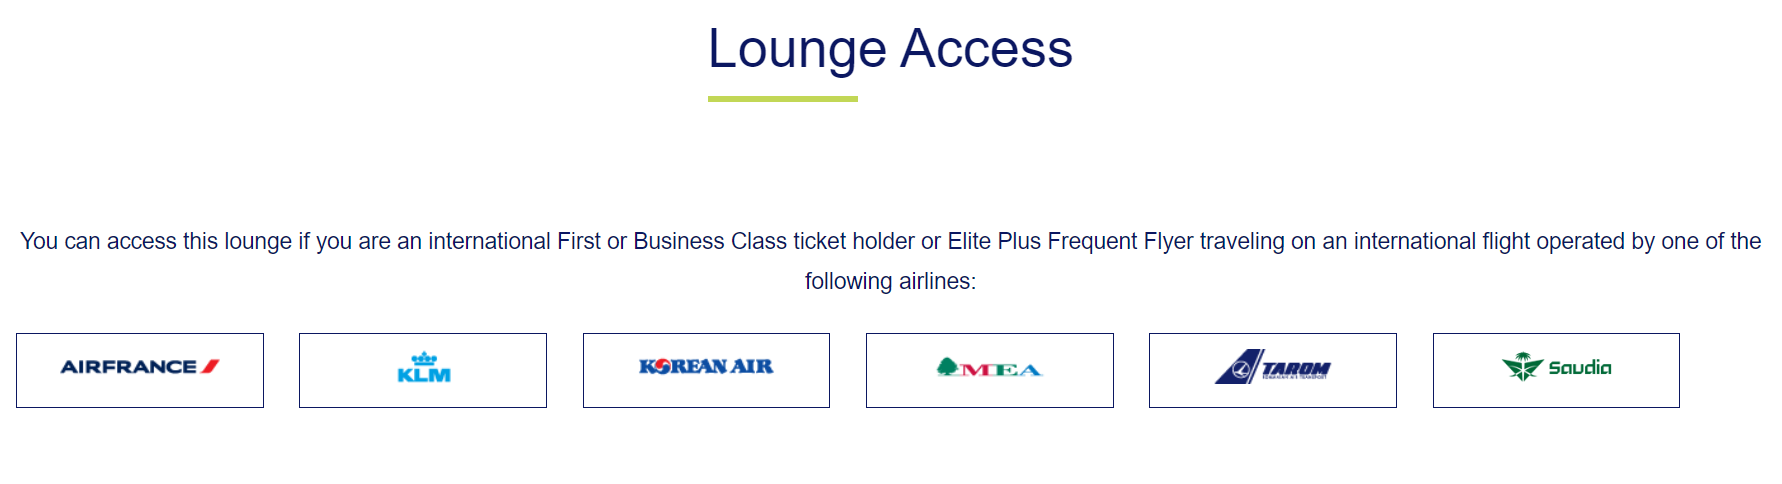 SkyTeam lounge access